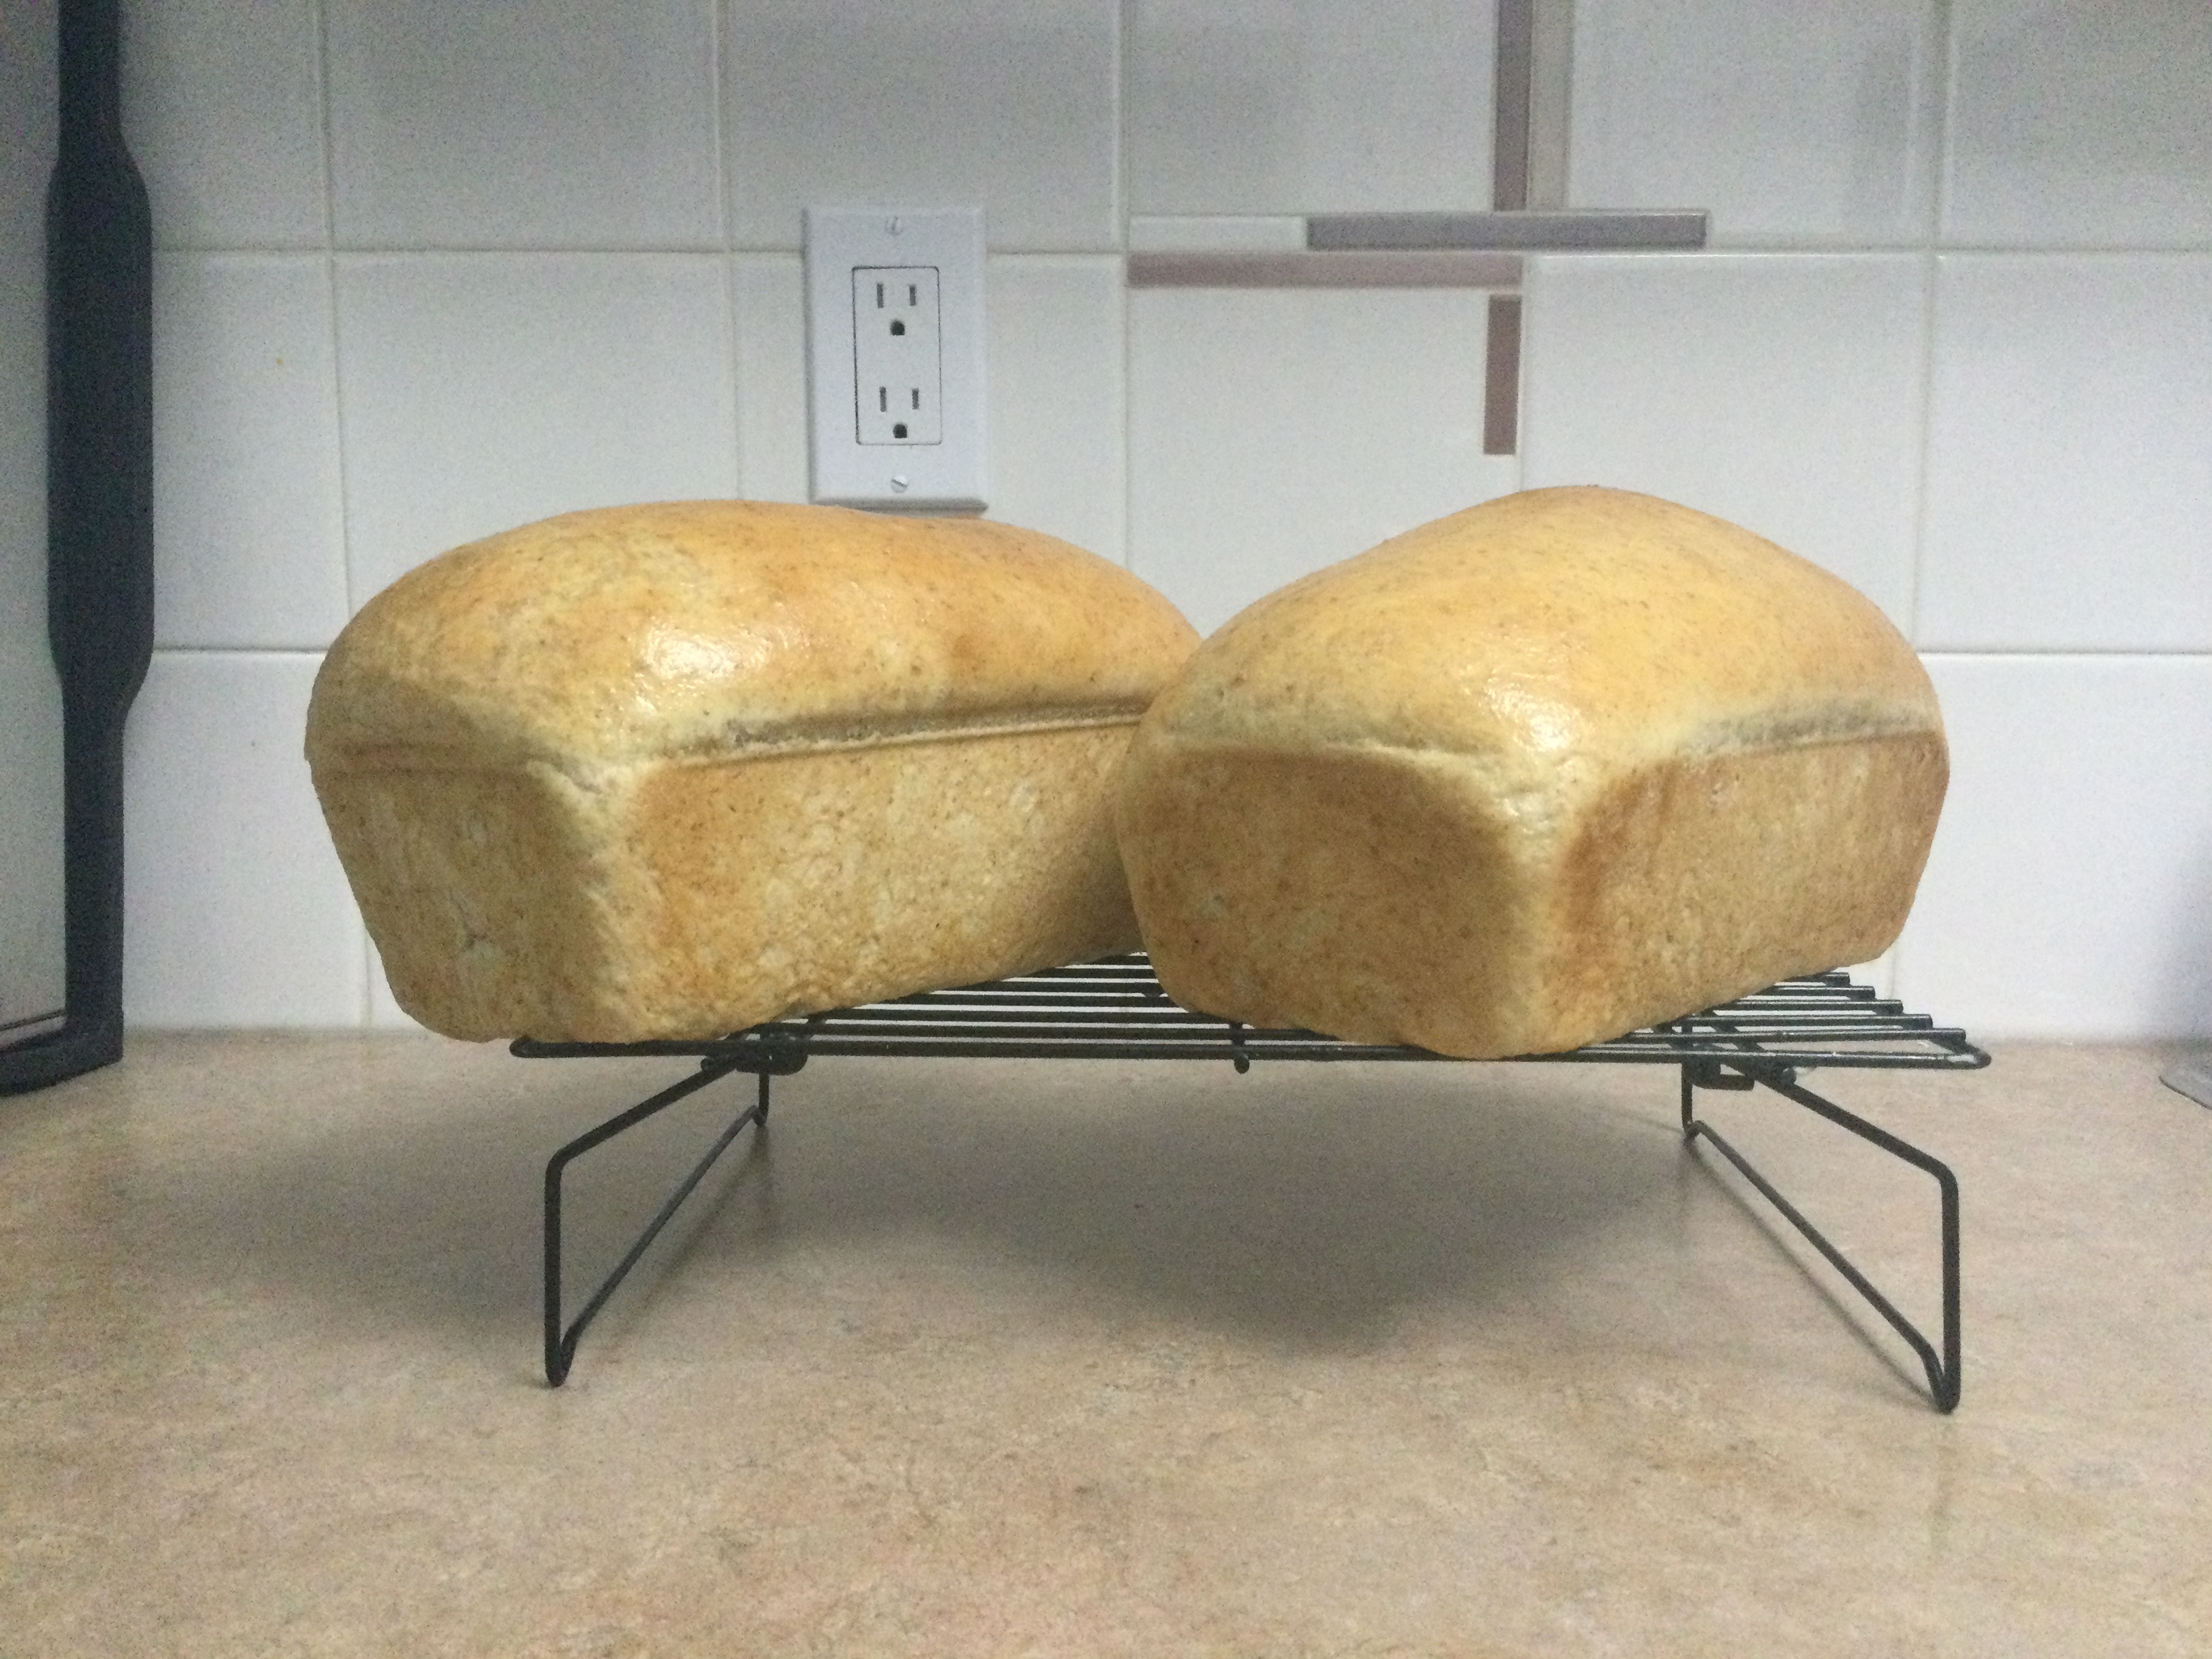 Simple Whole Wheat Bread 